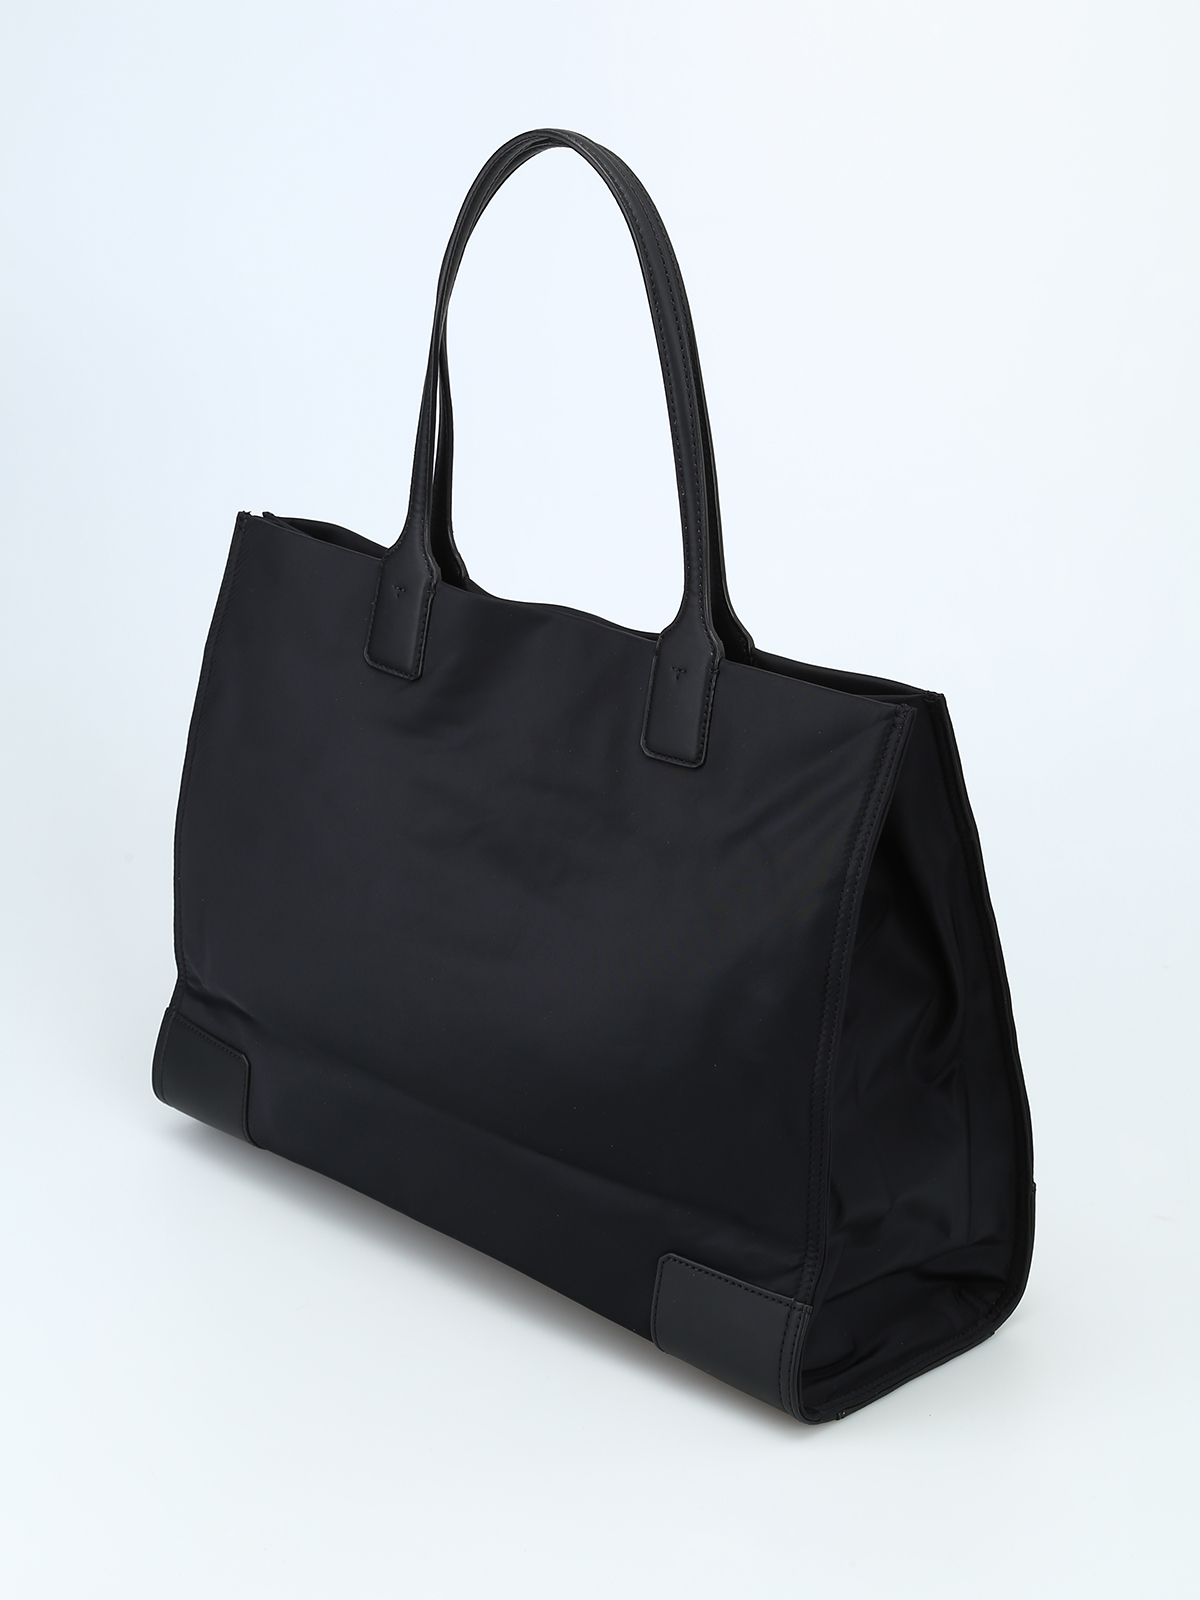 Totes bags Tory Burch - Ella black nylon tote - 45207001 | iKRIX.com